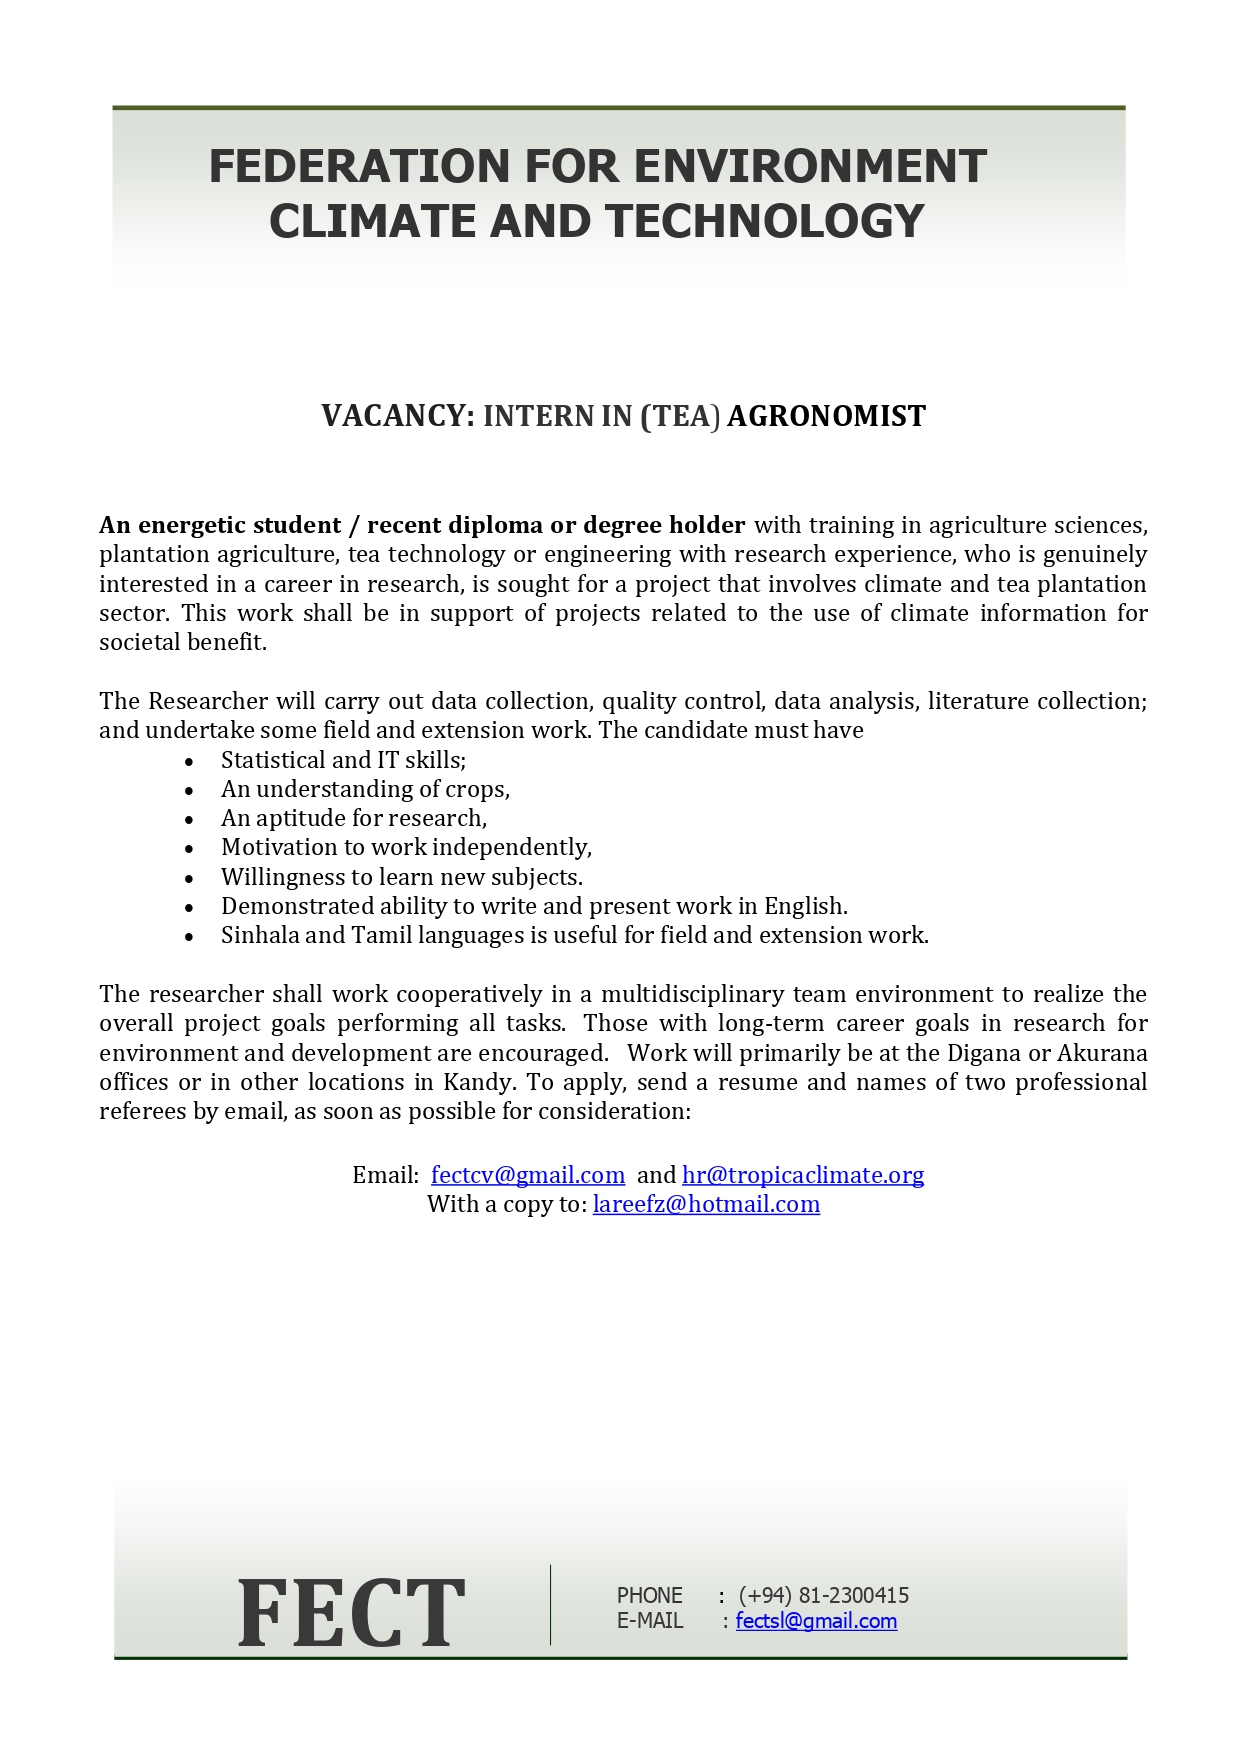  Vacancies are open for INTERN IN (TEA) AGRONOMIST